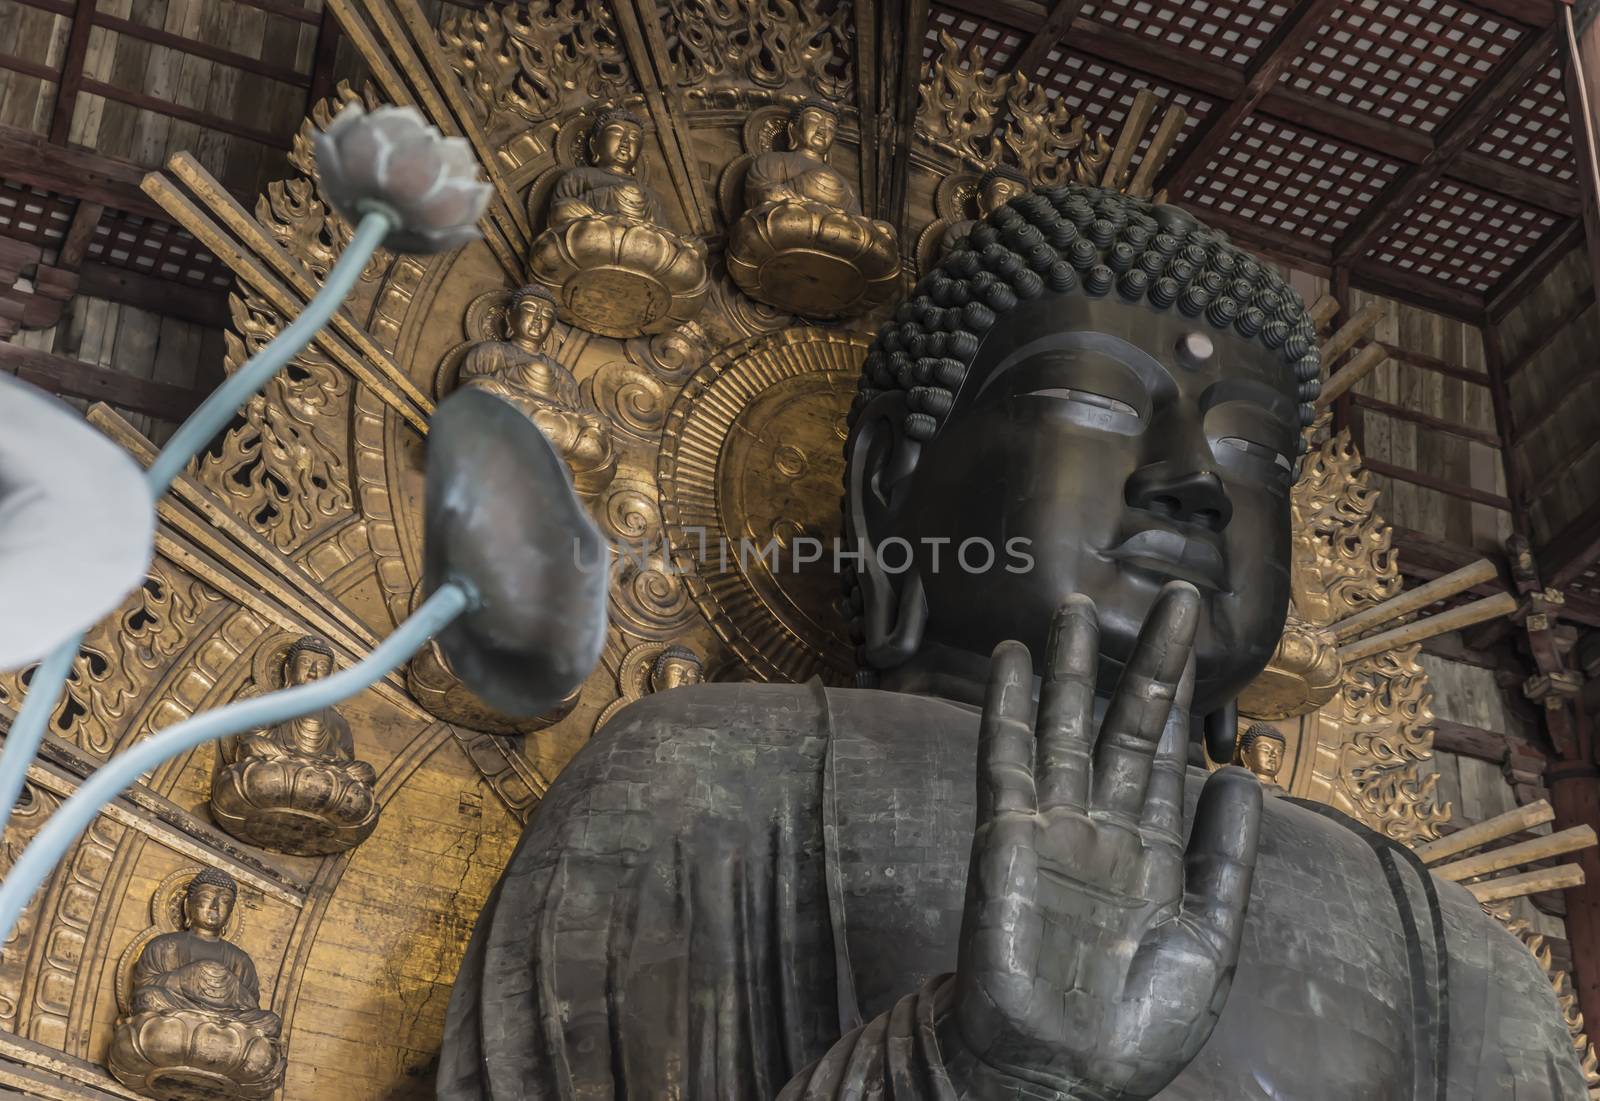 The lord called Buddha 1 by Yagyaparajuli